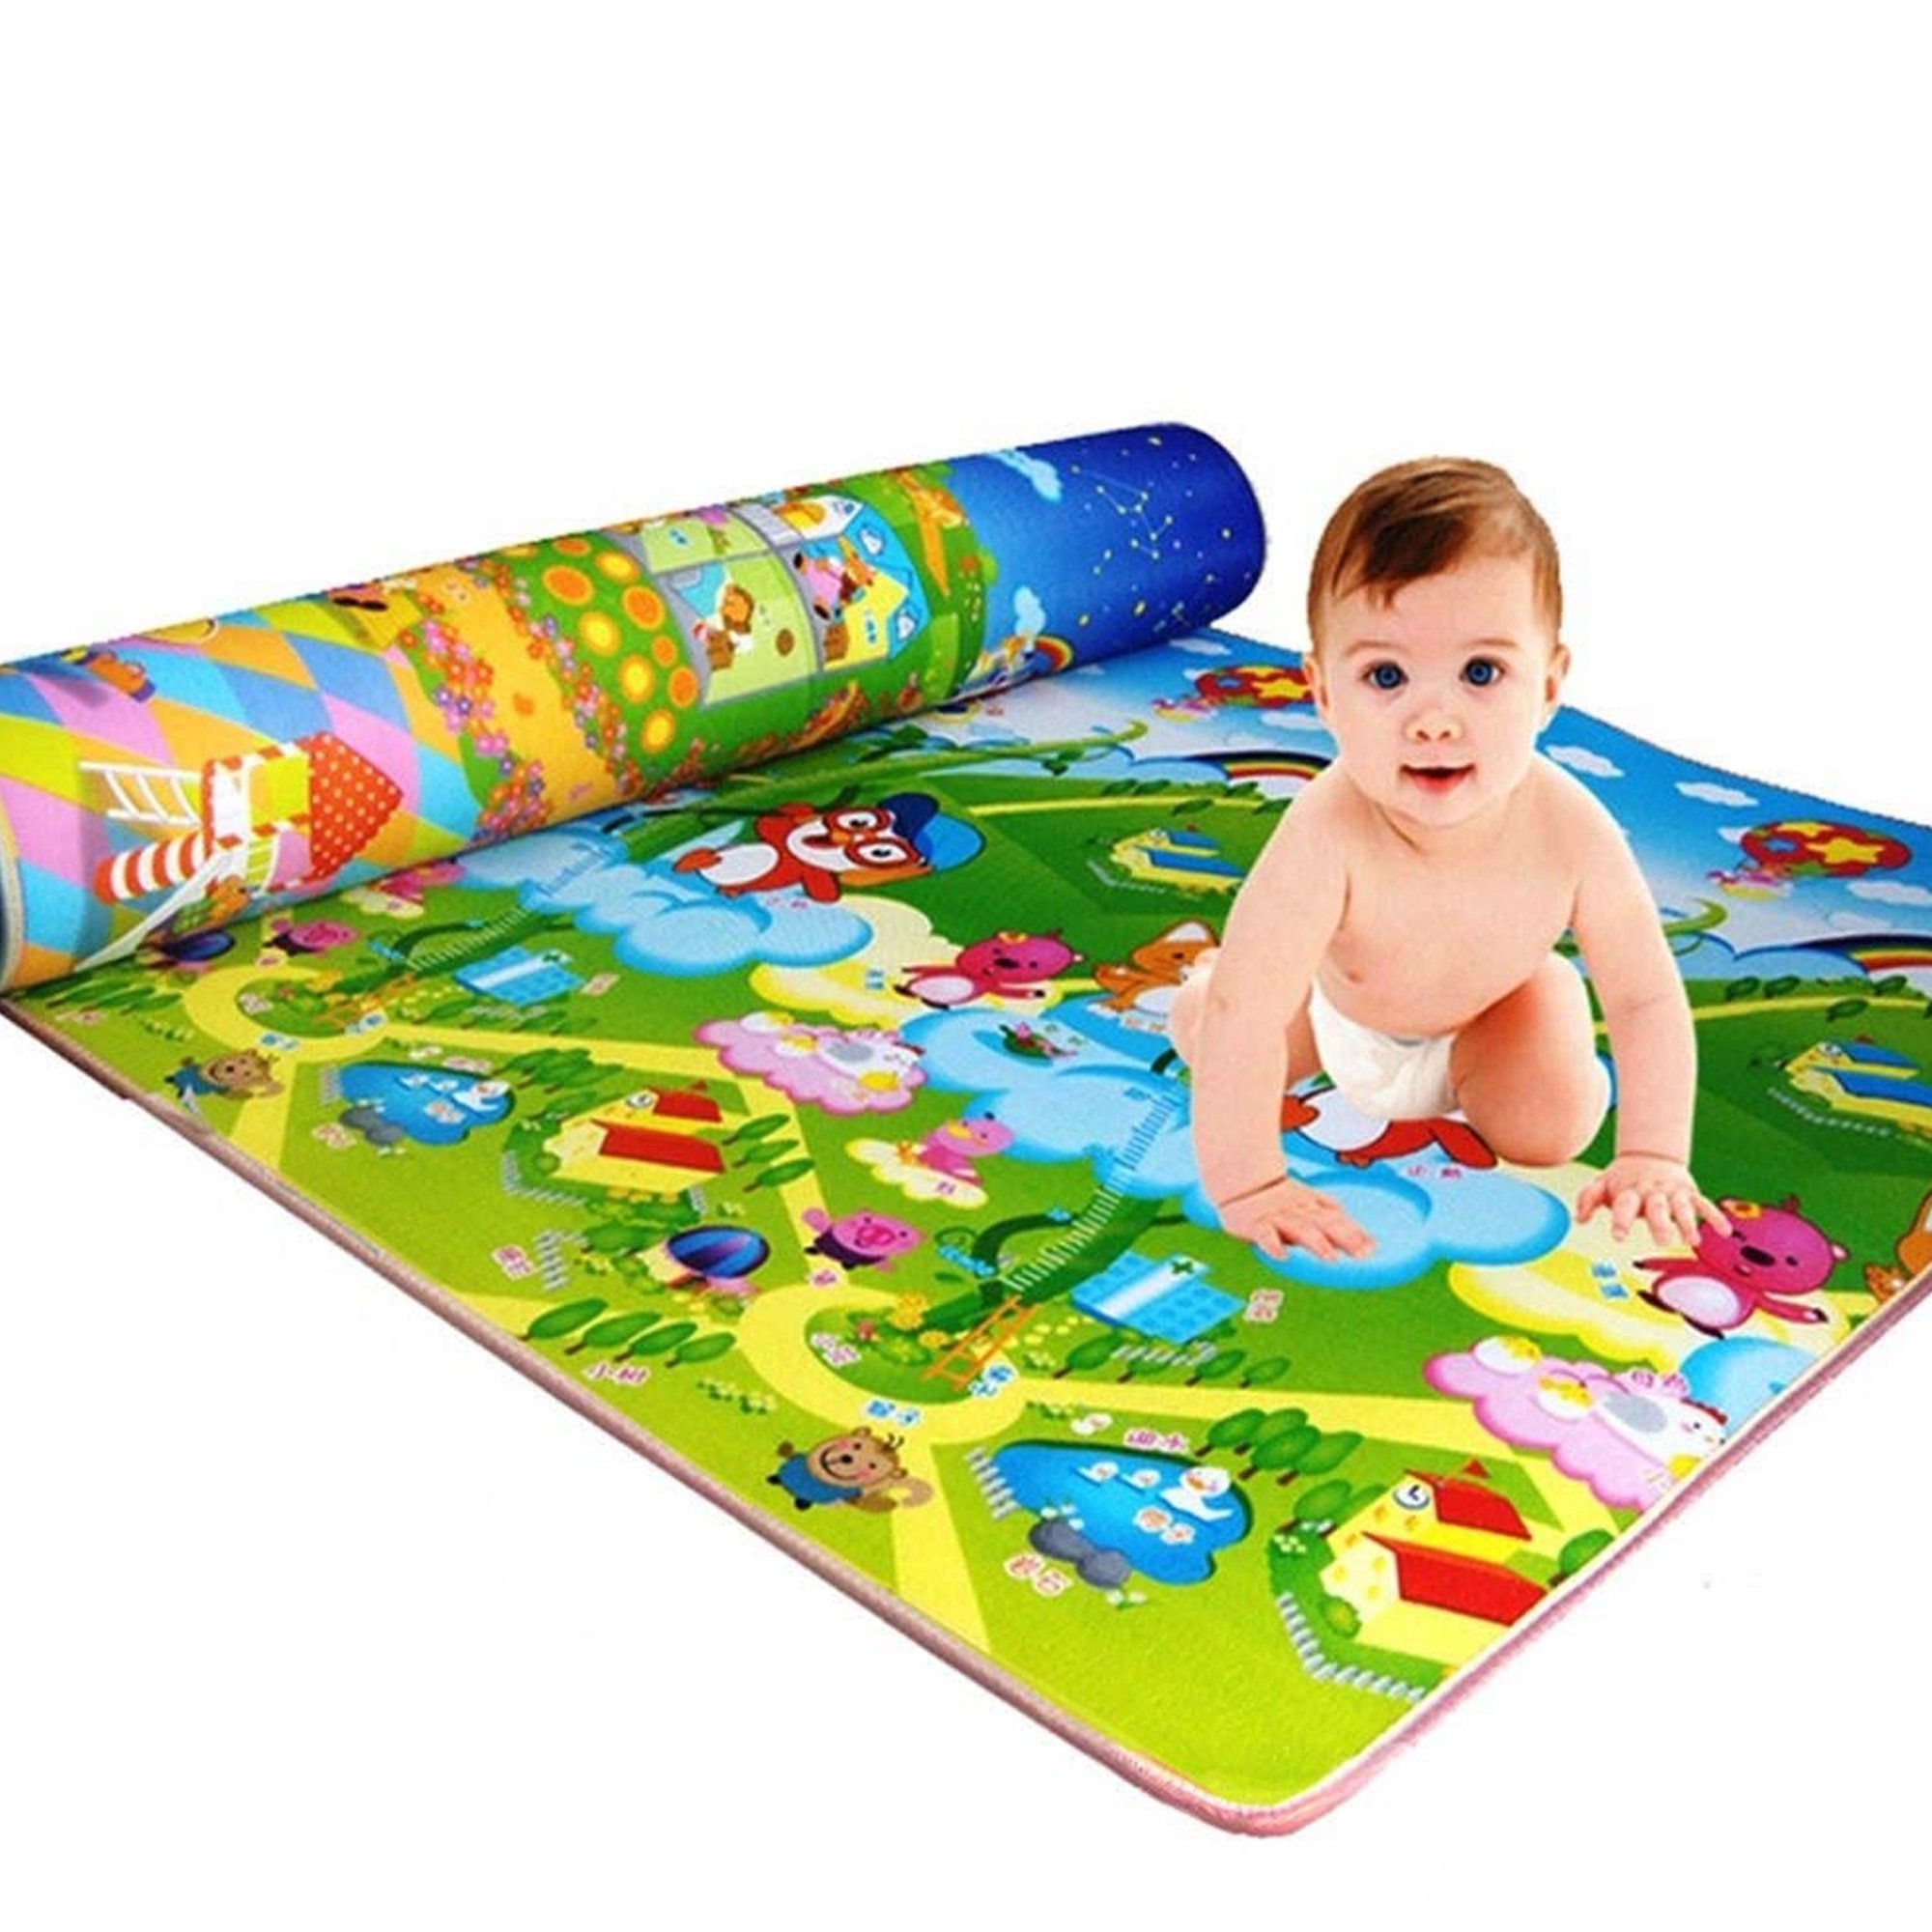 Musuos Baby Crawling Play Mat Kids Children Toddlers Floor Game PlayMat - image 1 of 6